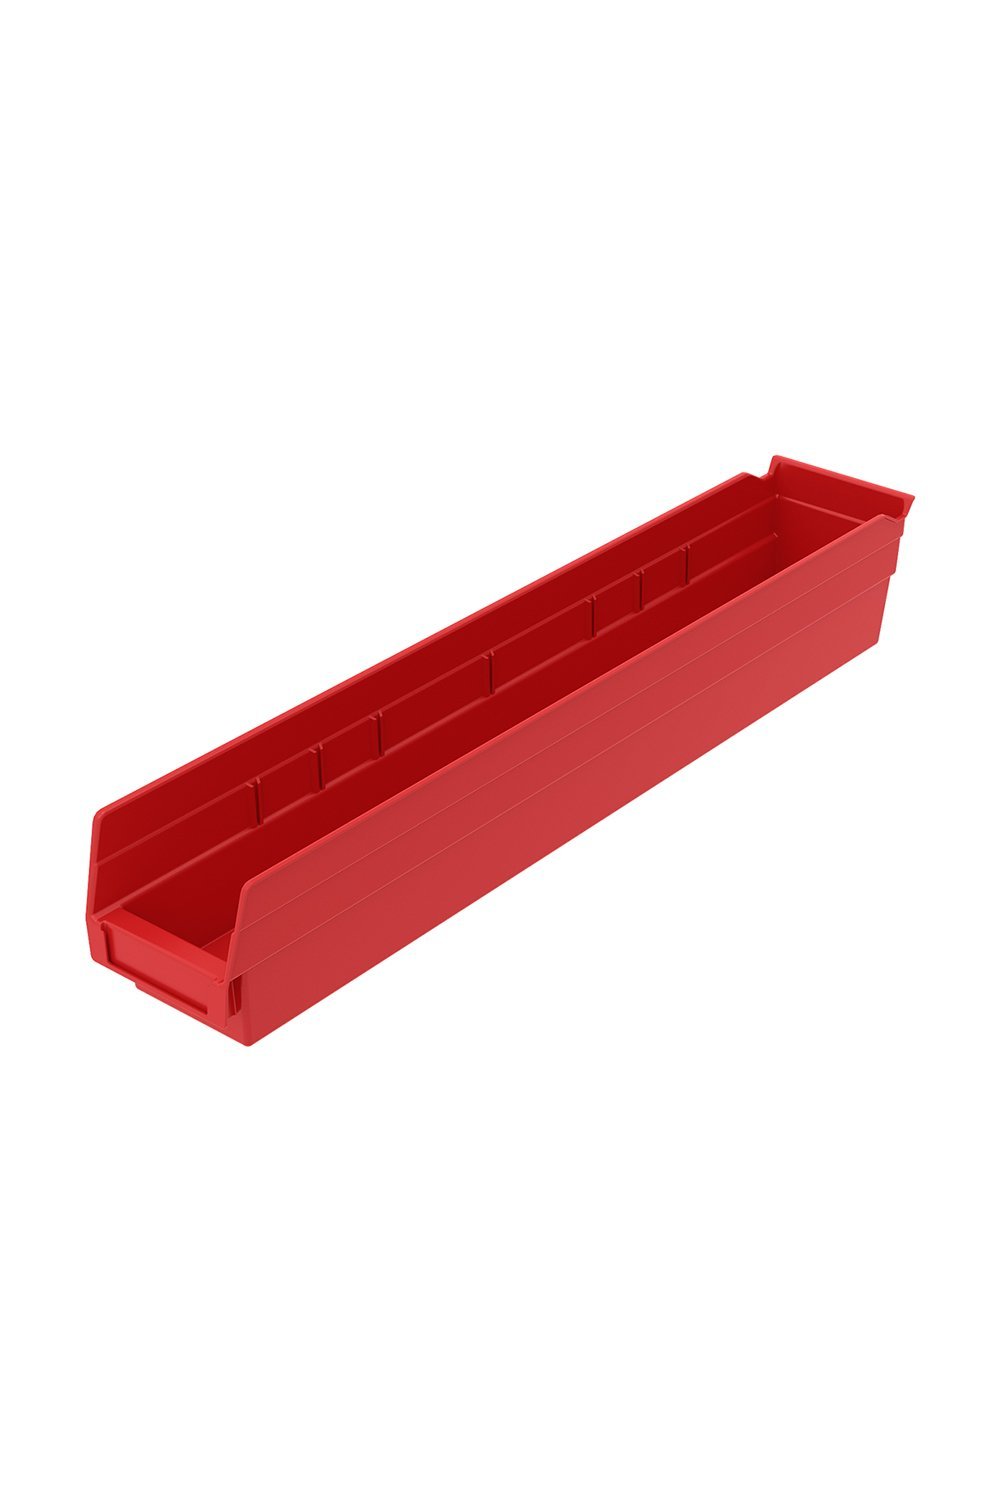 Shelf Bin for 24"D Shelves Bins & Containers Acart 23-5/8'' x 4-1/8'' x 4'' Red 